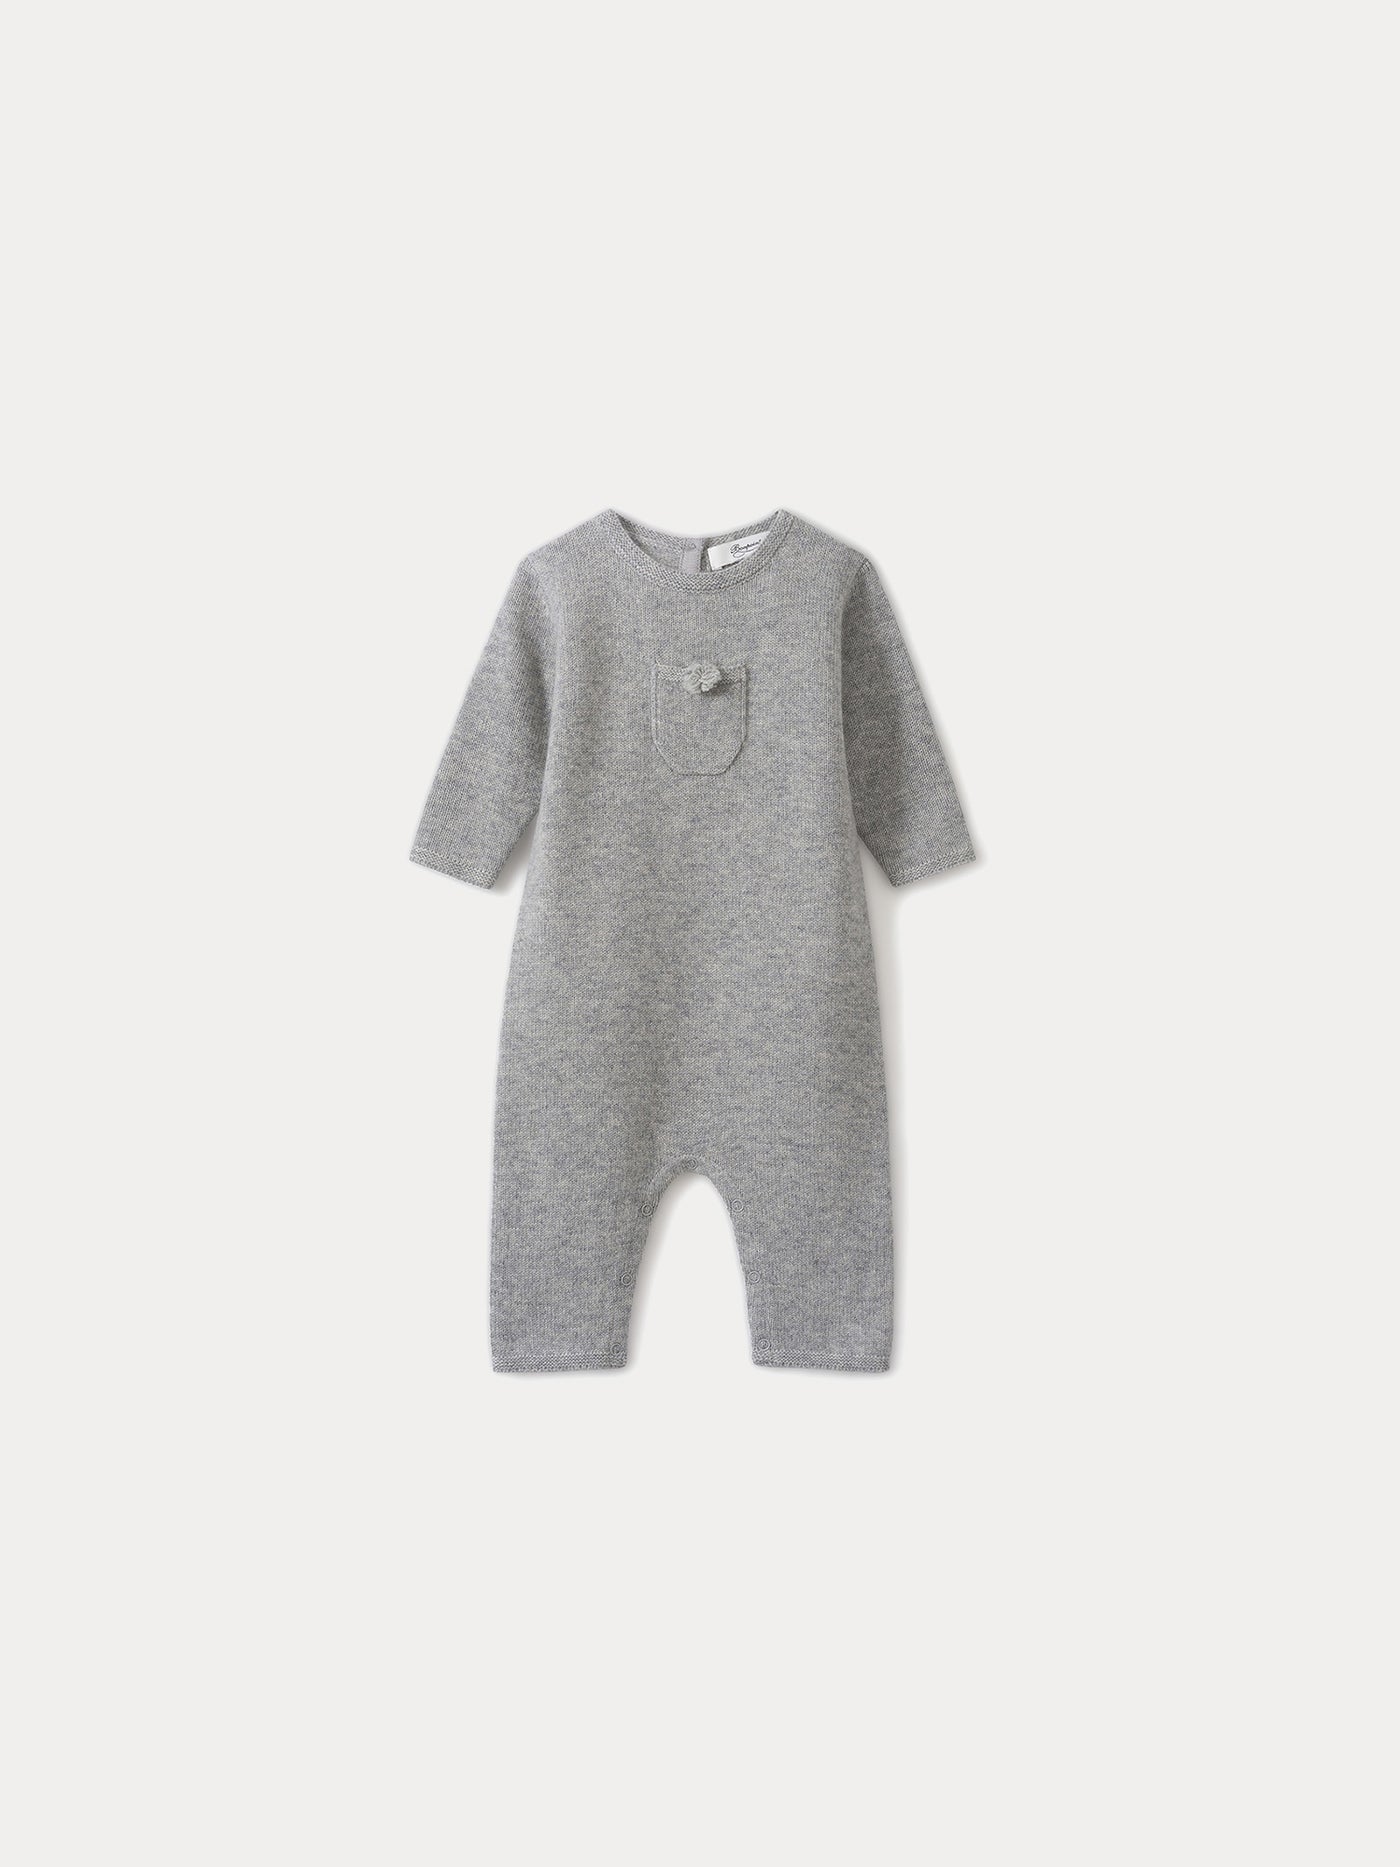 Babies' playsuit Heathered gray